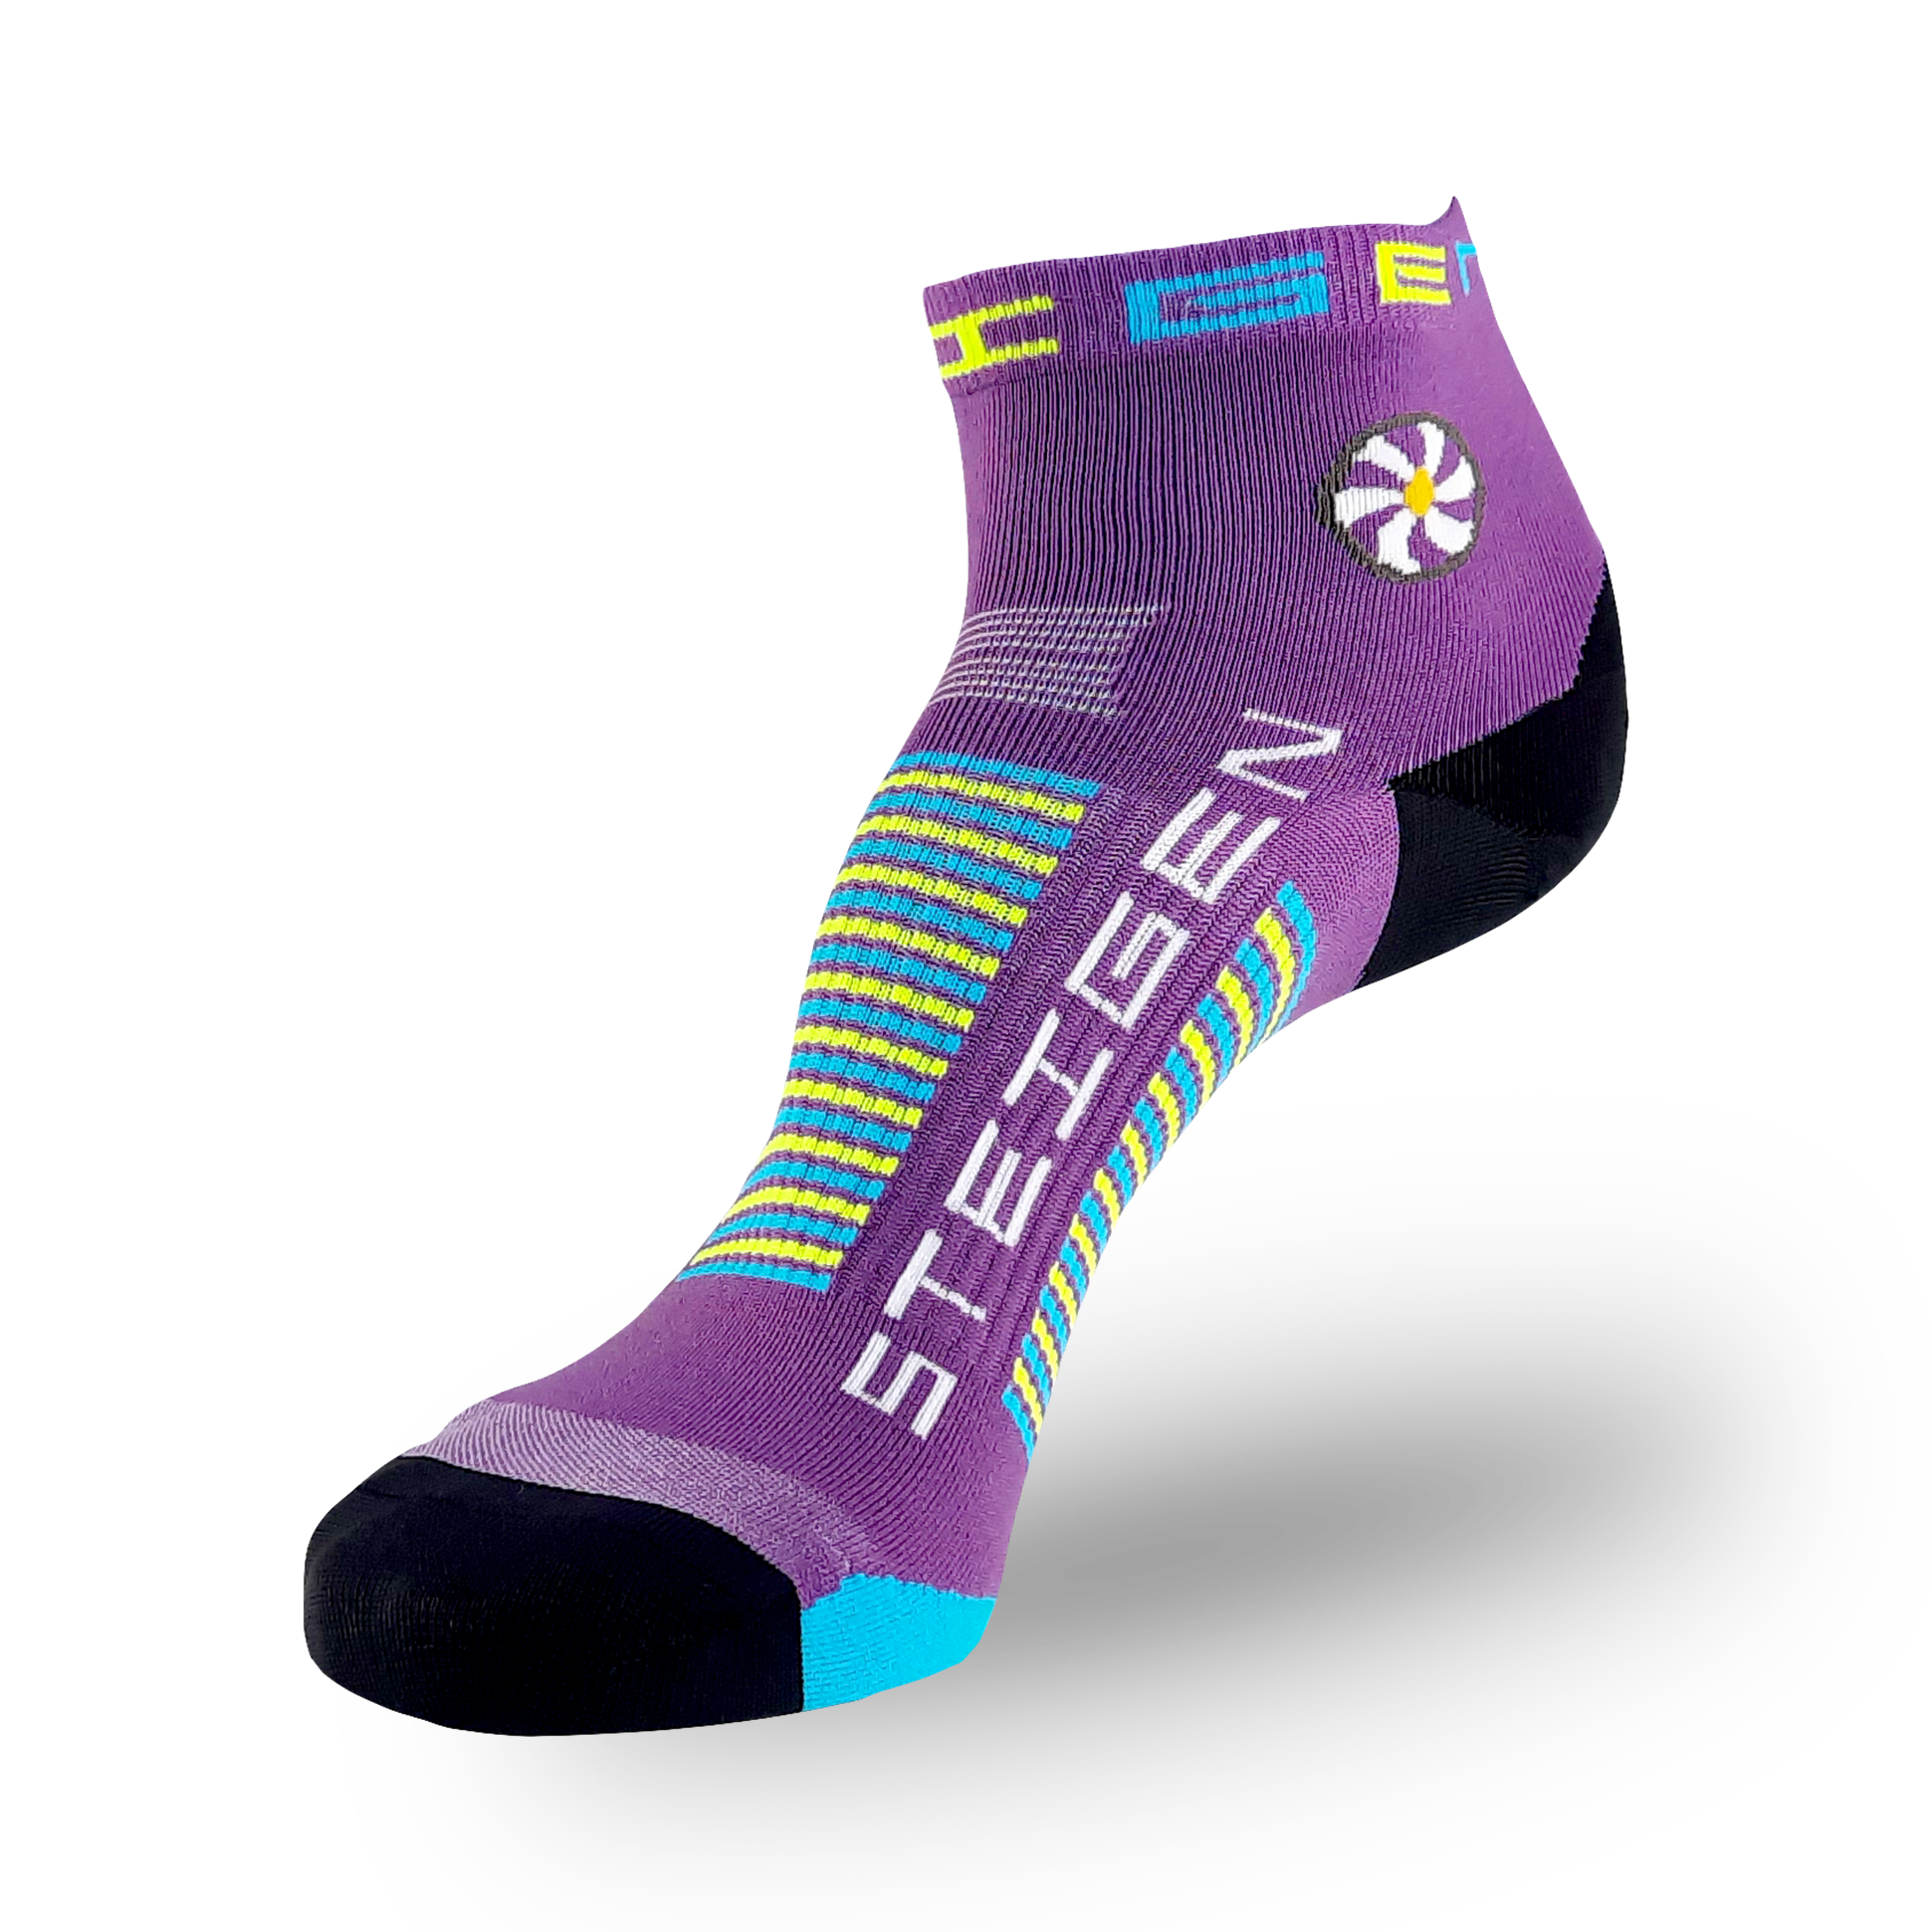 Bubblegum Purple Running Socks ¼ Length